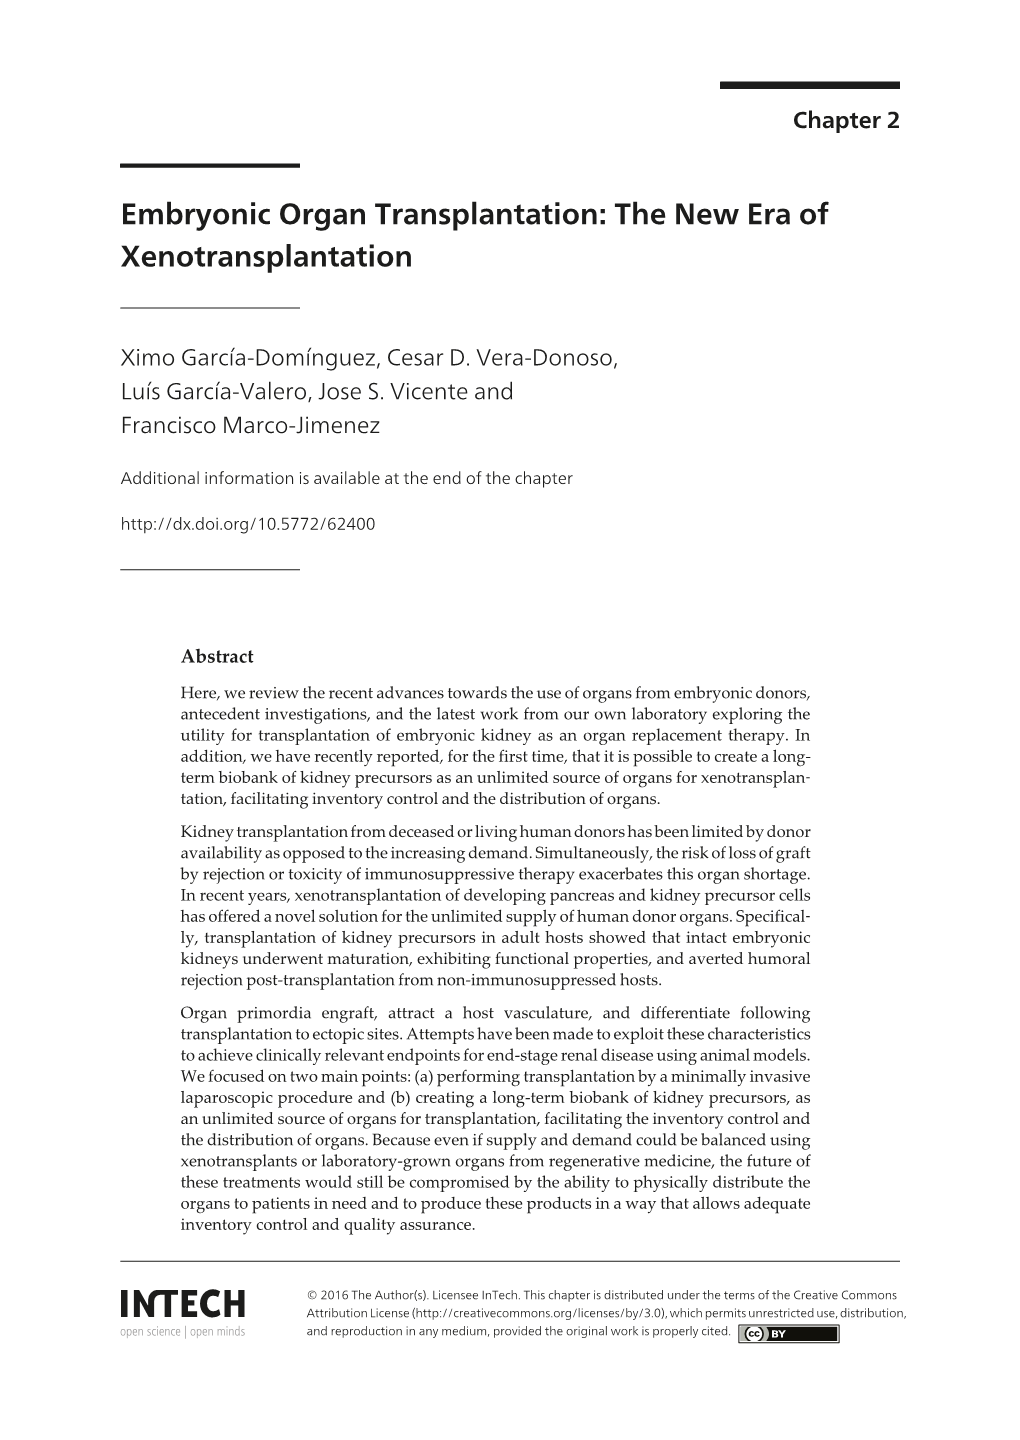 Embryonic Organ Transplantation: the New Era of Xenotransplantation